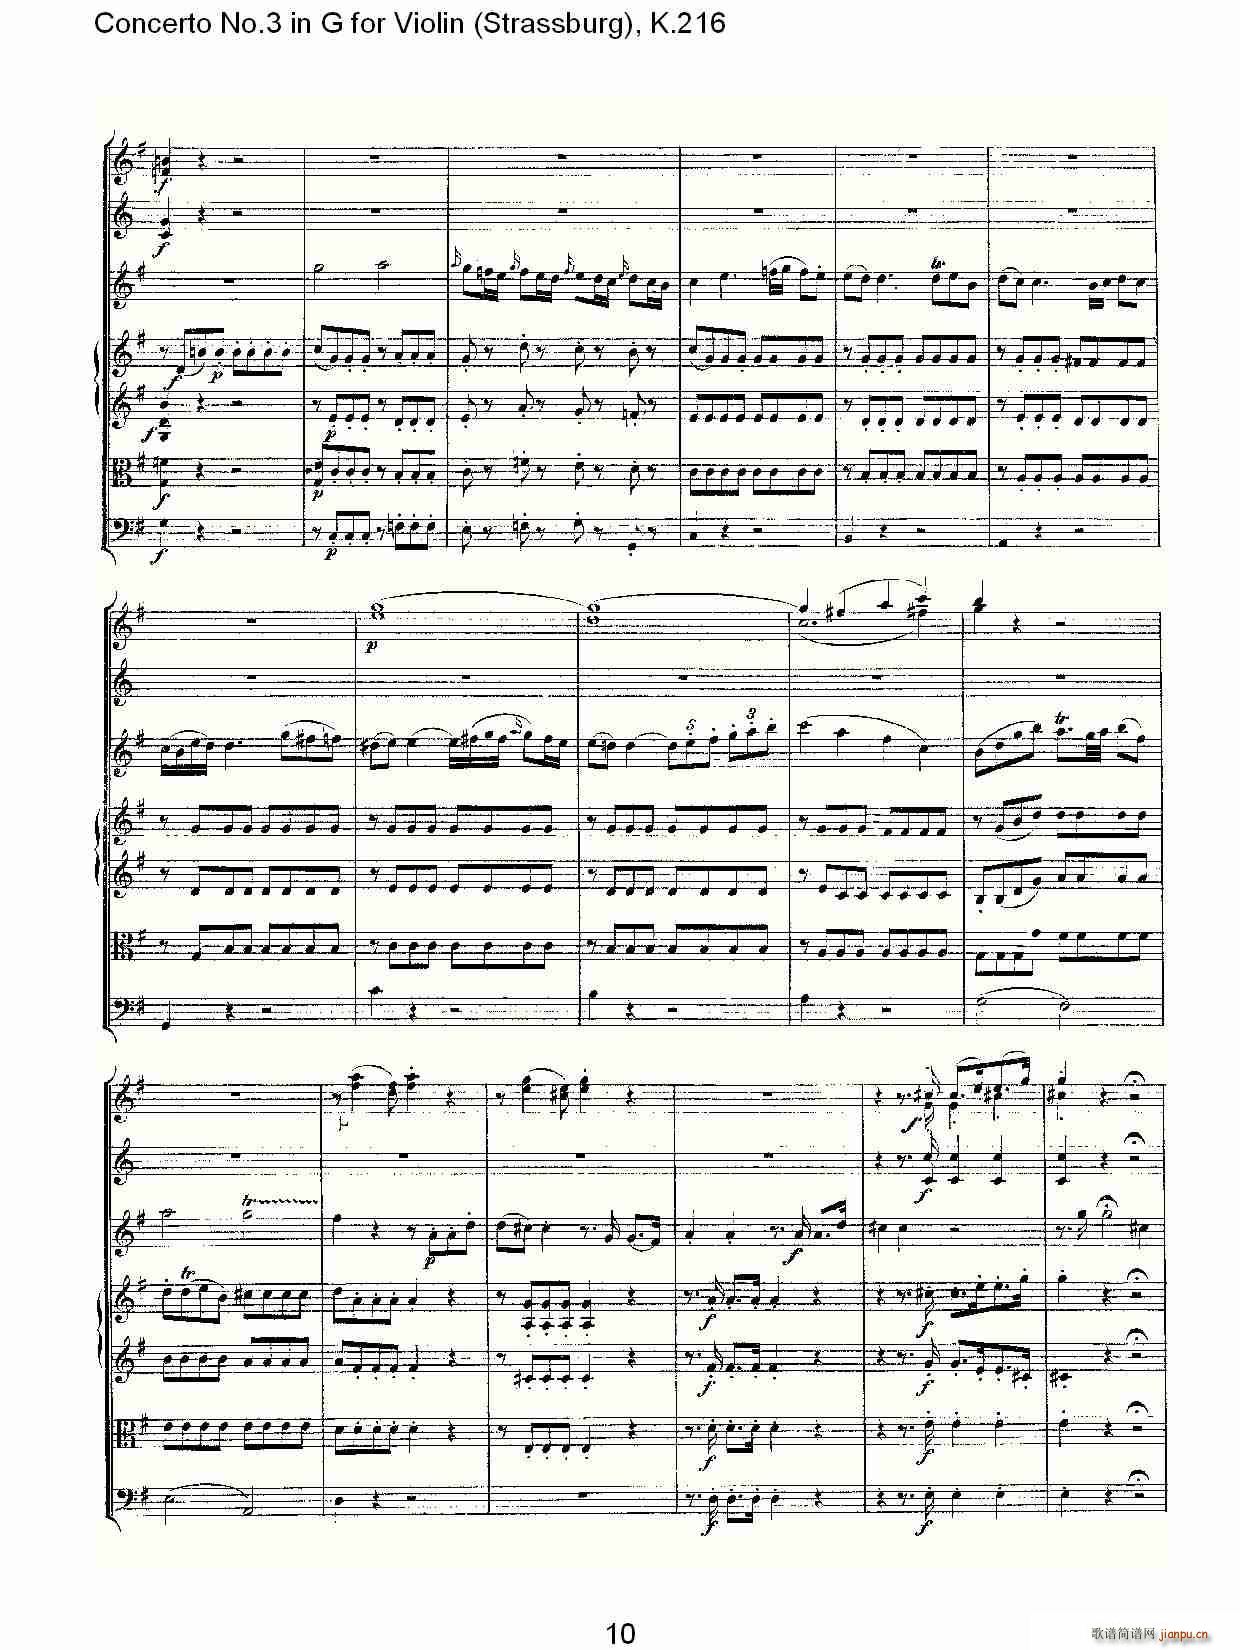 Concerto No.3 in G for Violin K.216(С)10